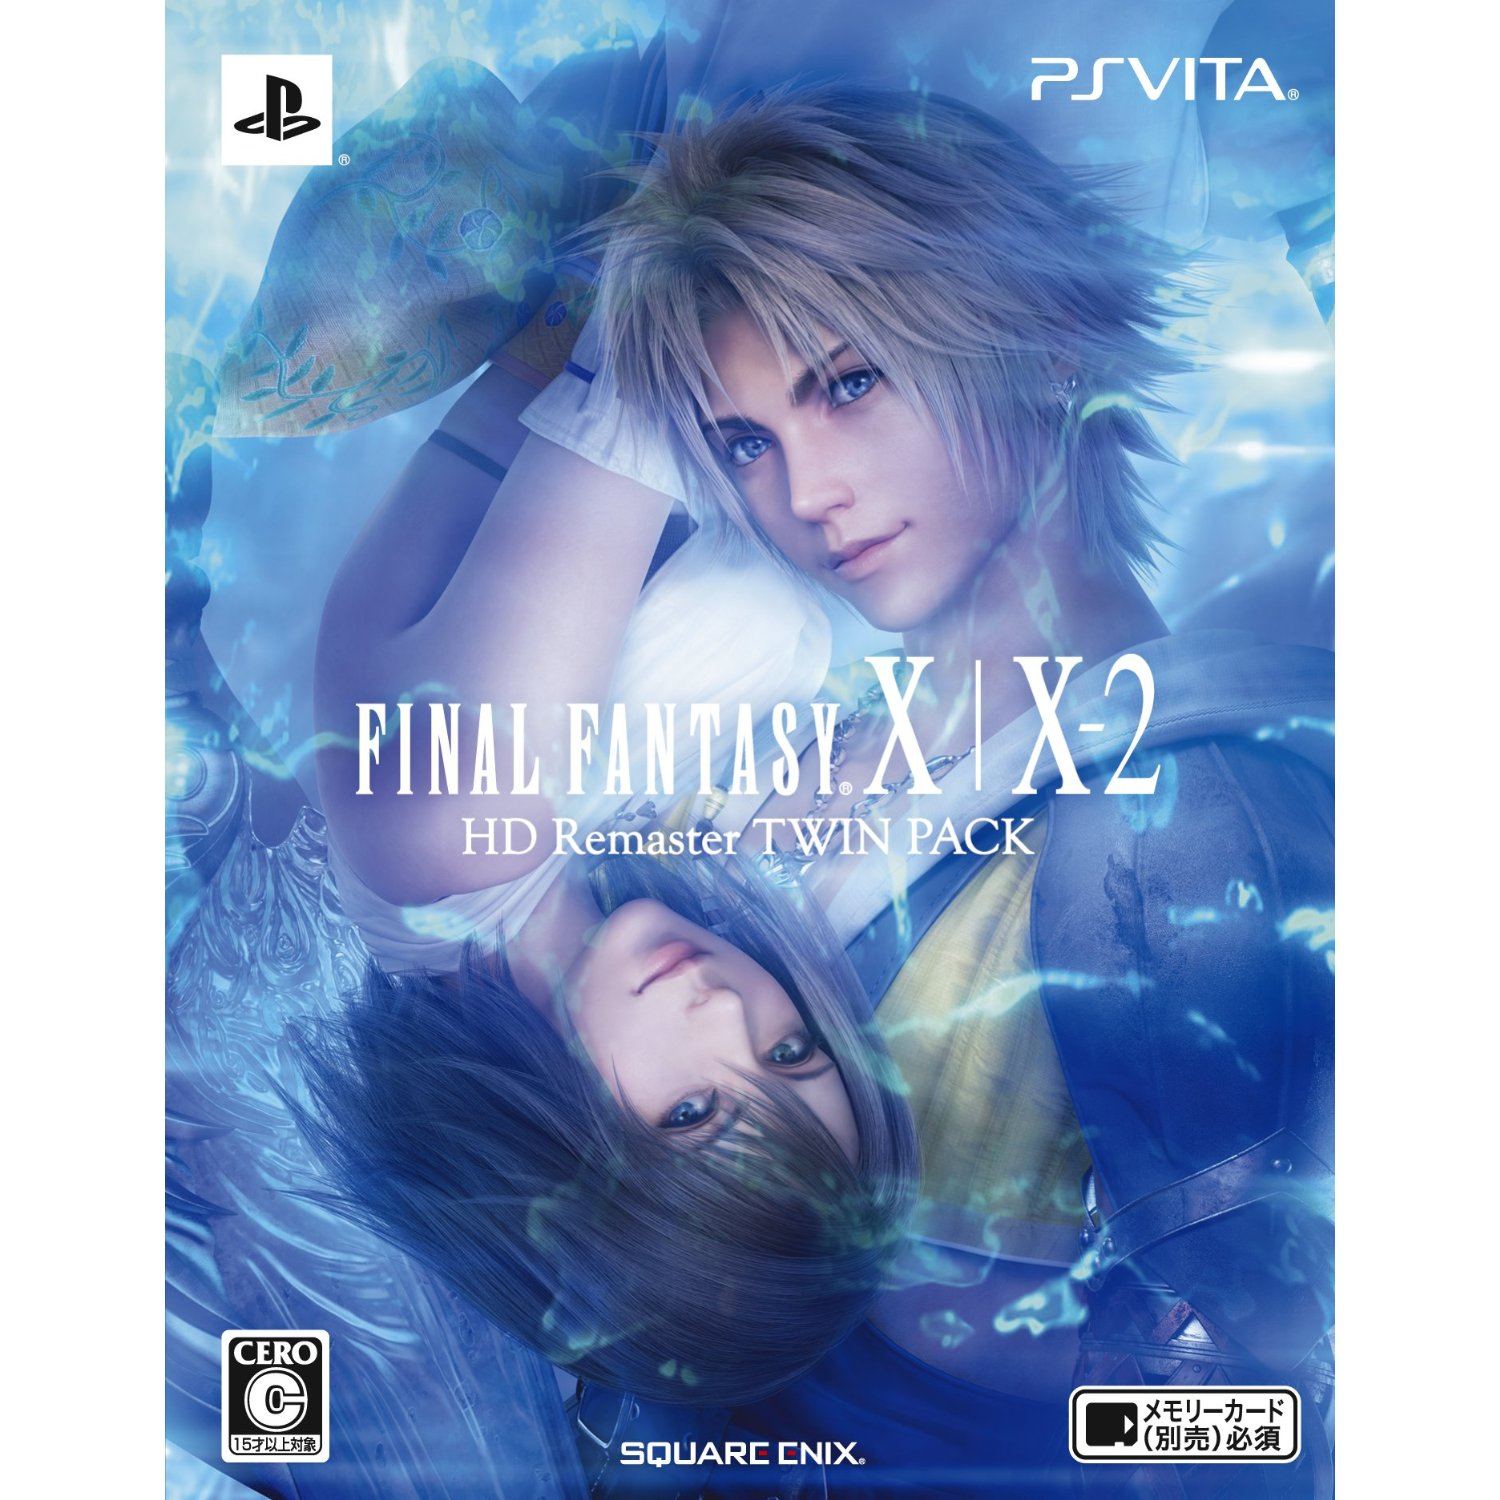 Final Fantasy X / X-2 HD Remaster Twin Pack for PlayStation Vita